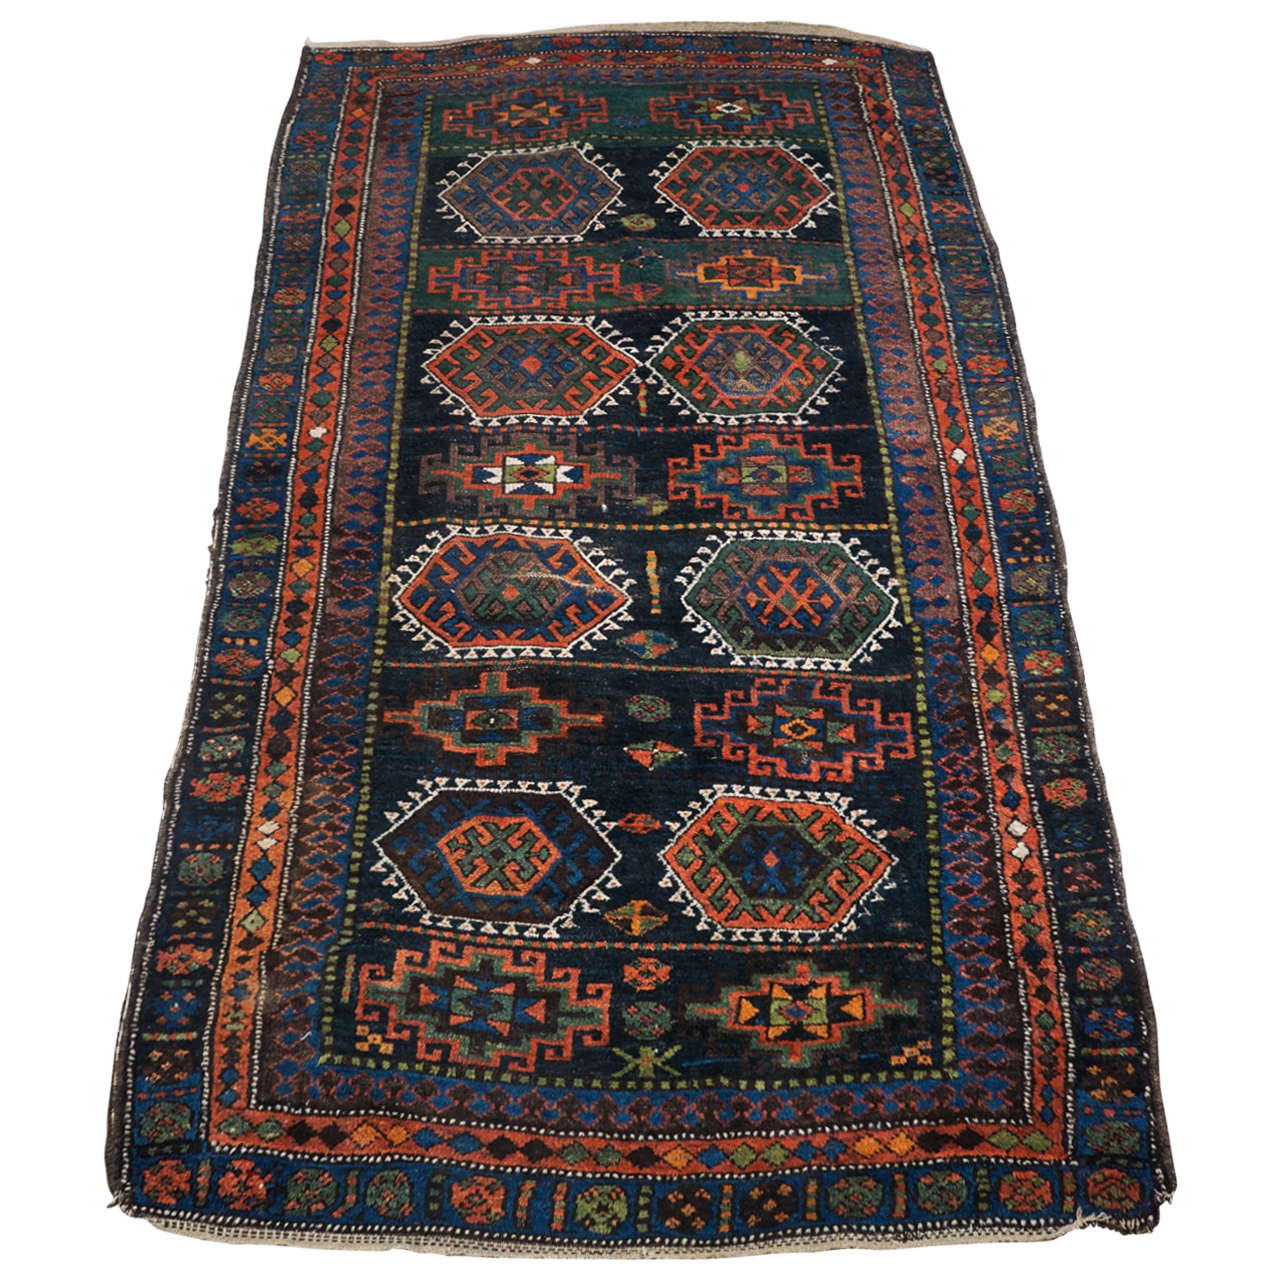 Beautiful Vintage Turkish Carpet For Sale